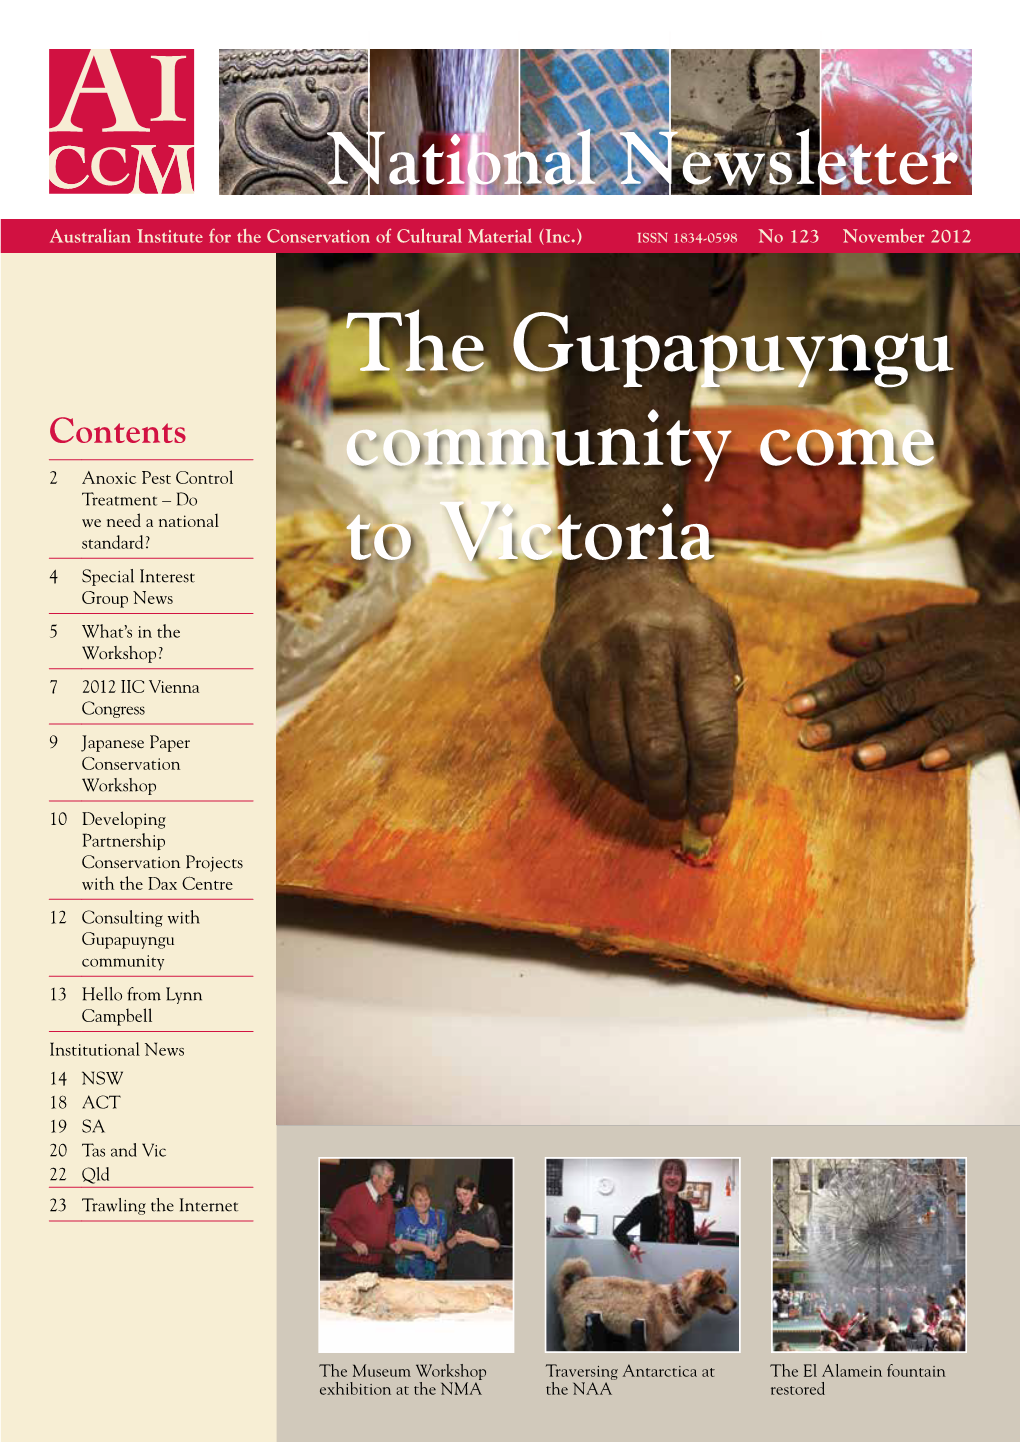 The Gupapuyngu Community Come to Victoria